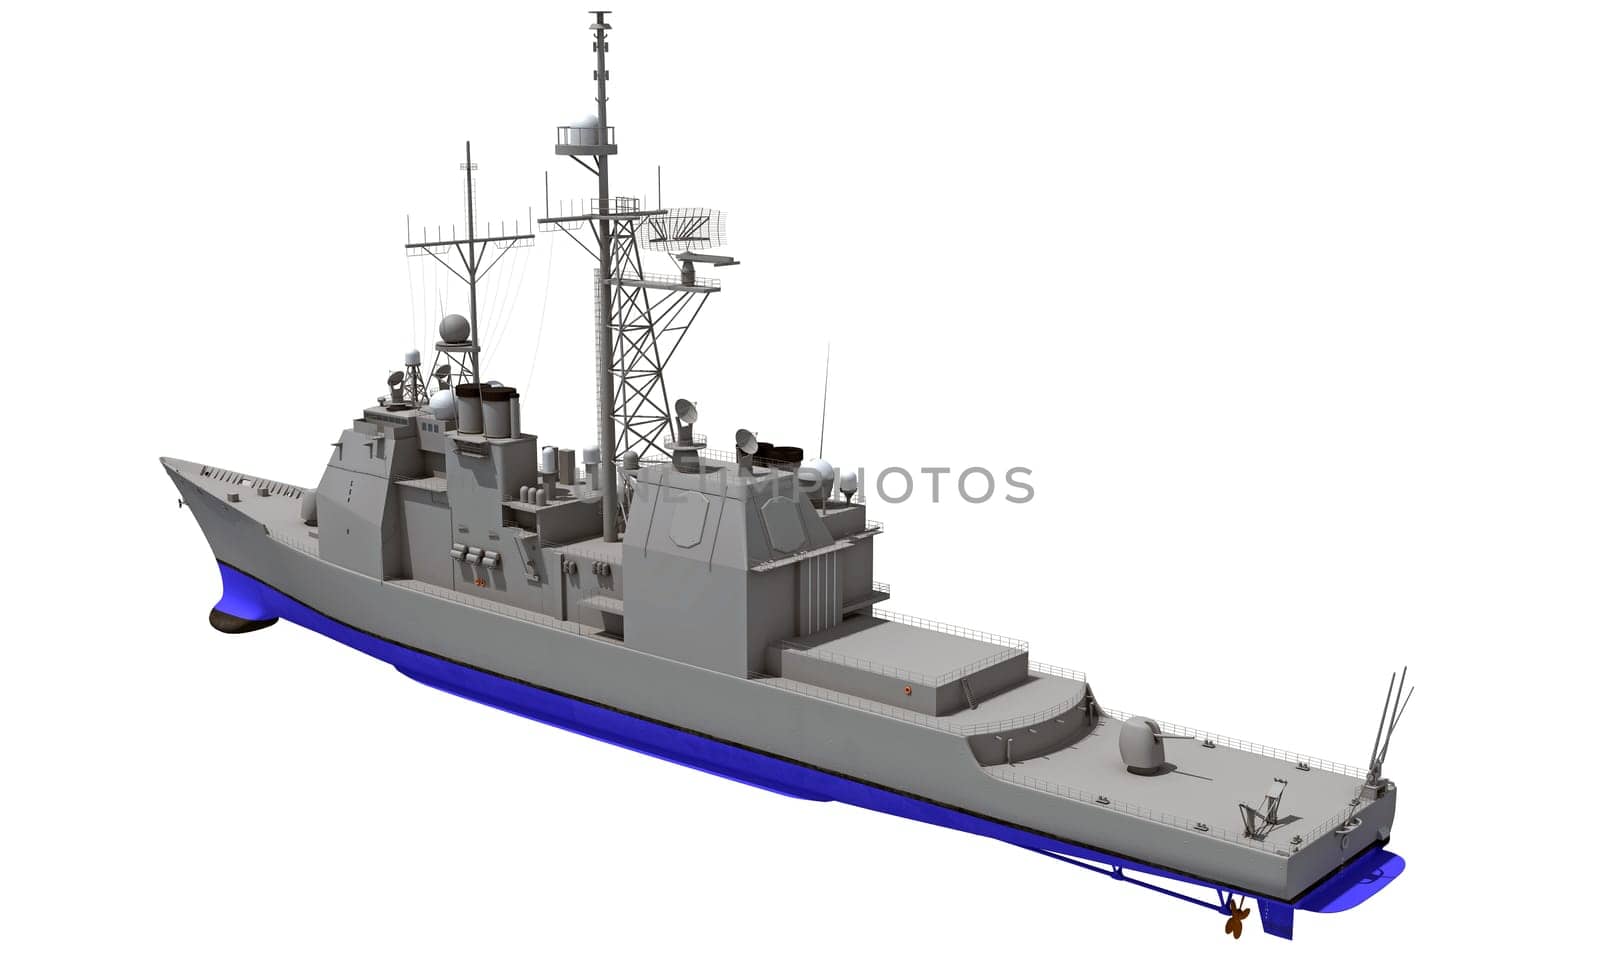 Military Vessel Missile Cruiser warship 3D rendering model on white background